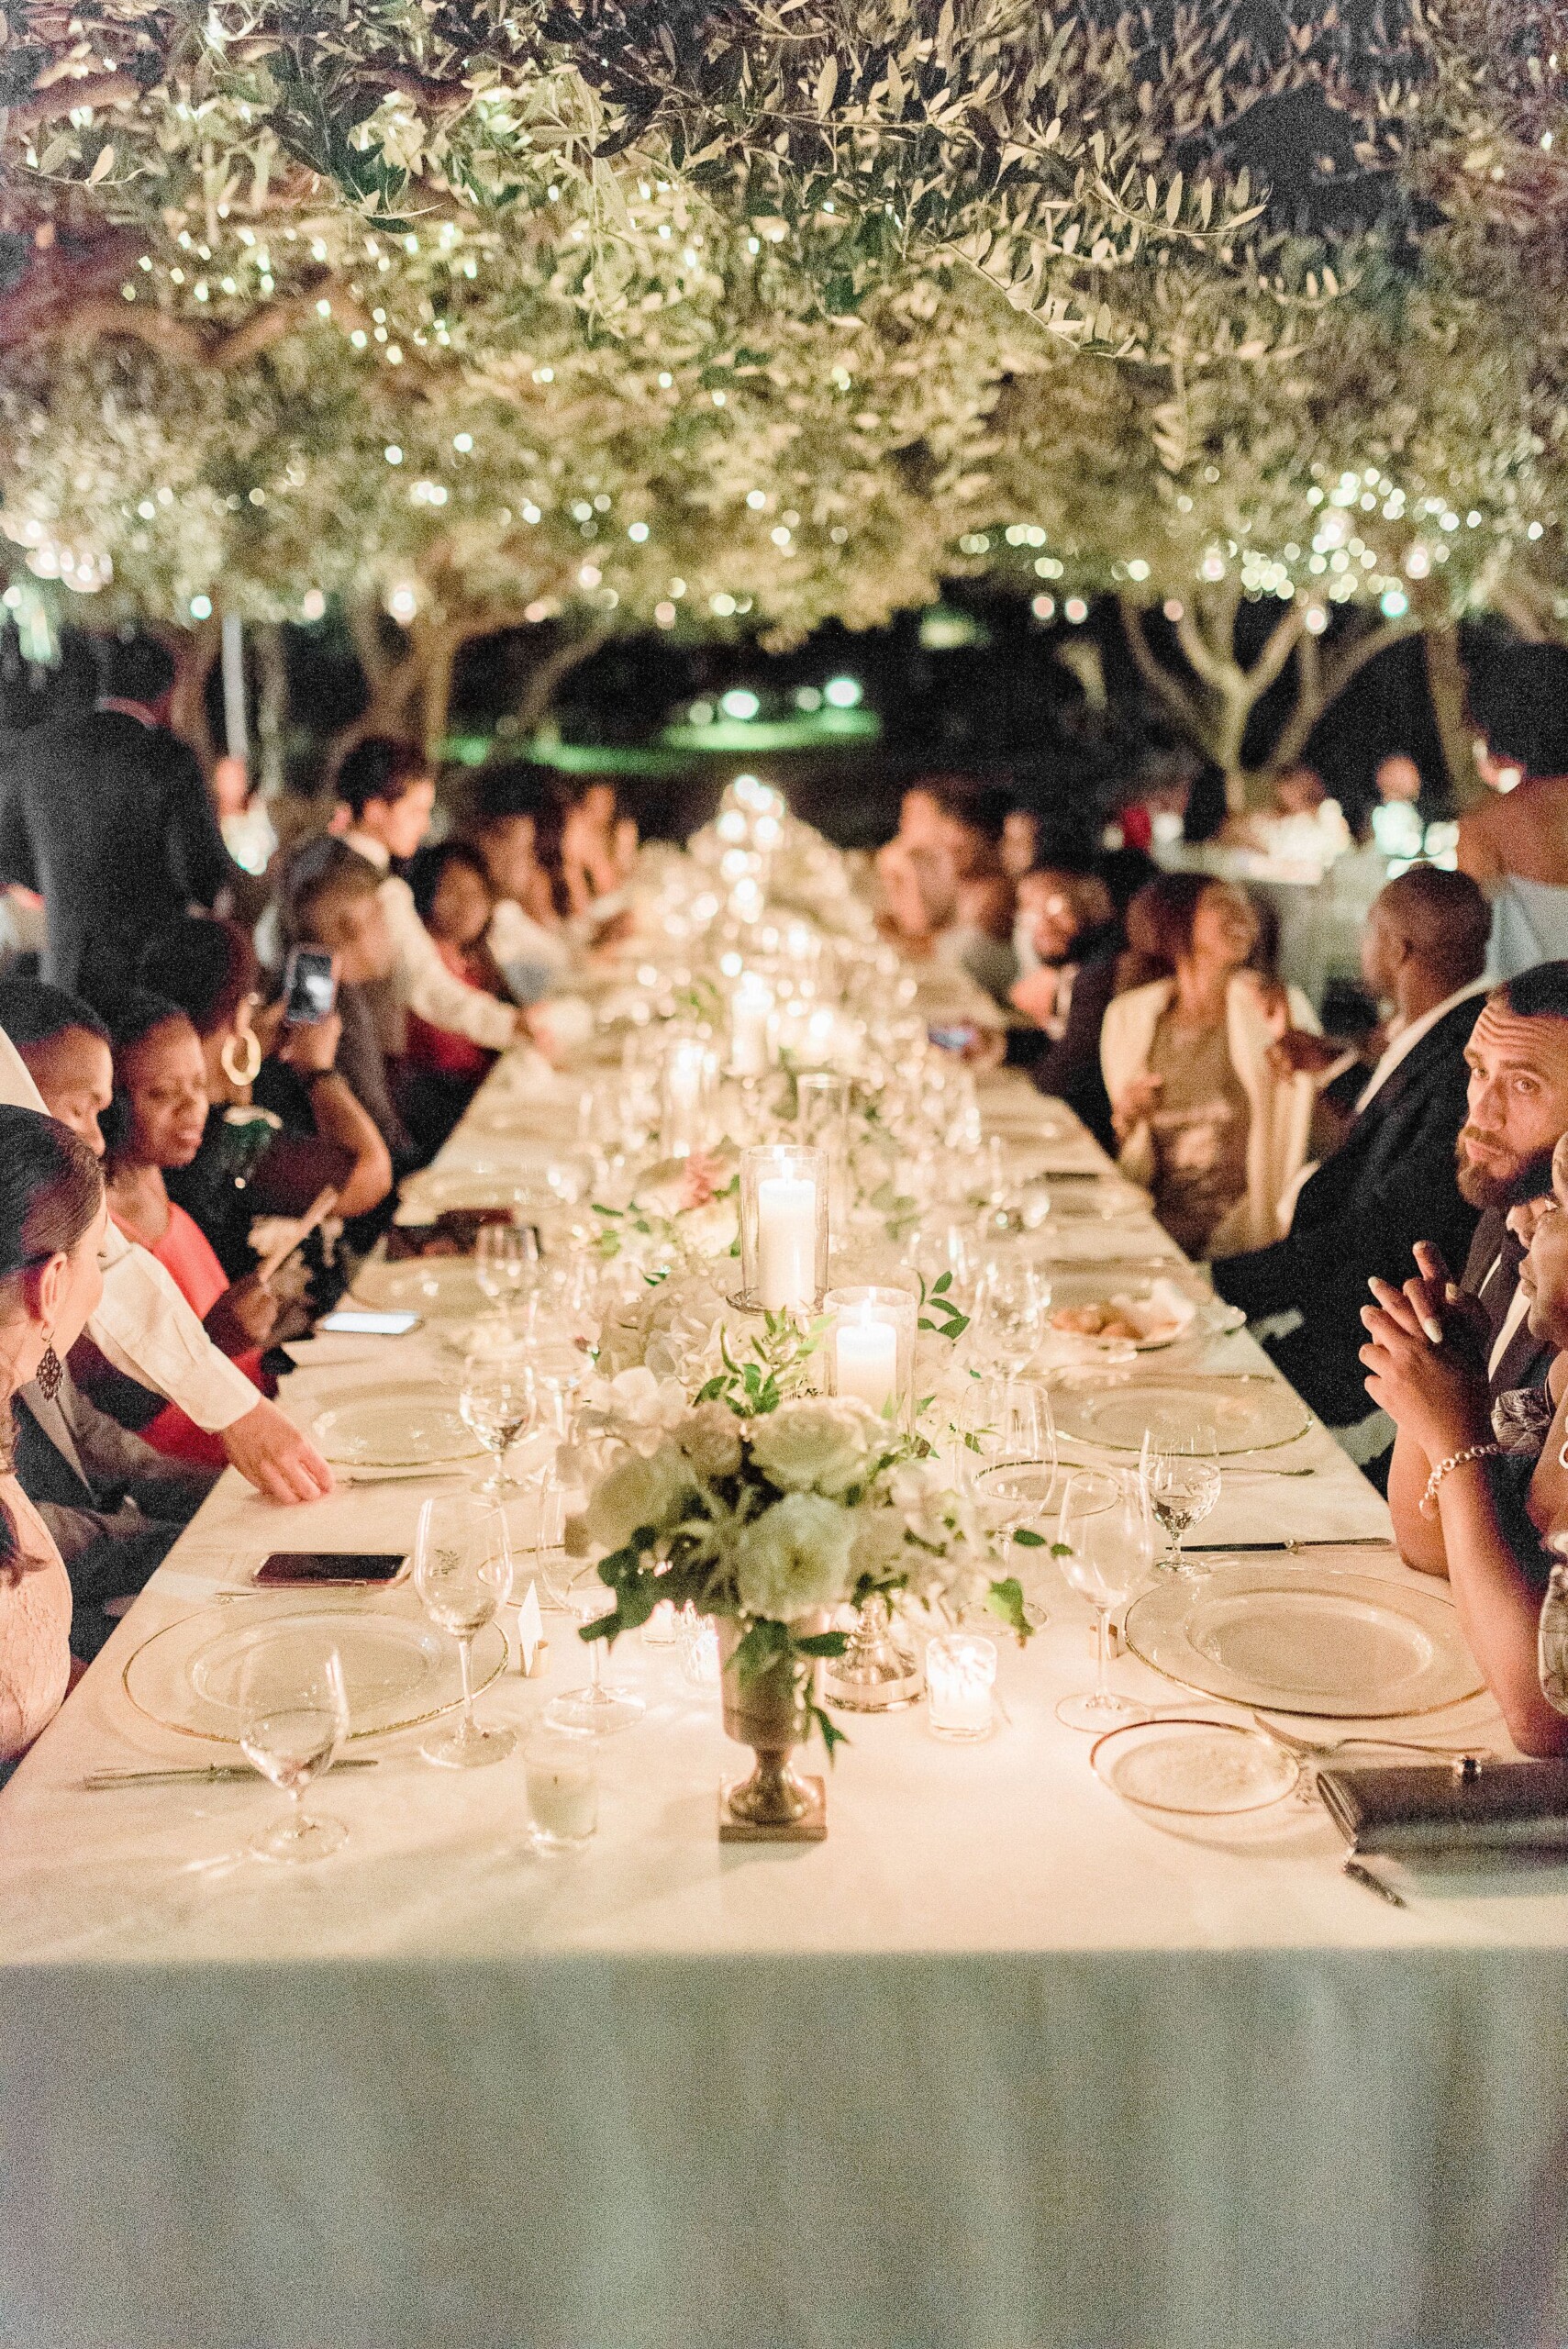 Romantic wedding dinner under the olive trees